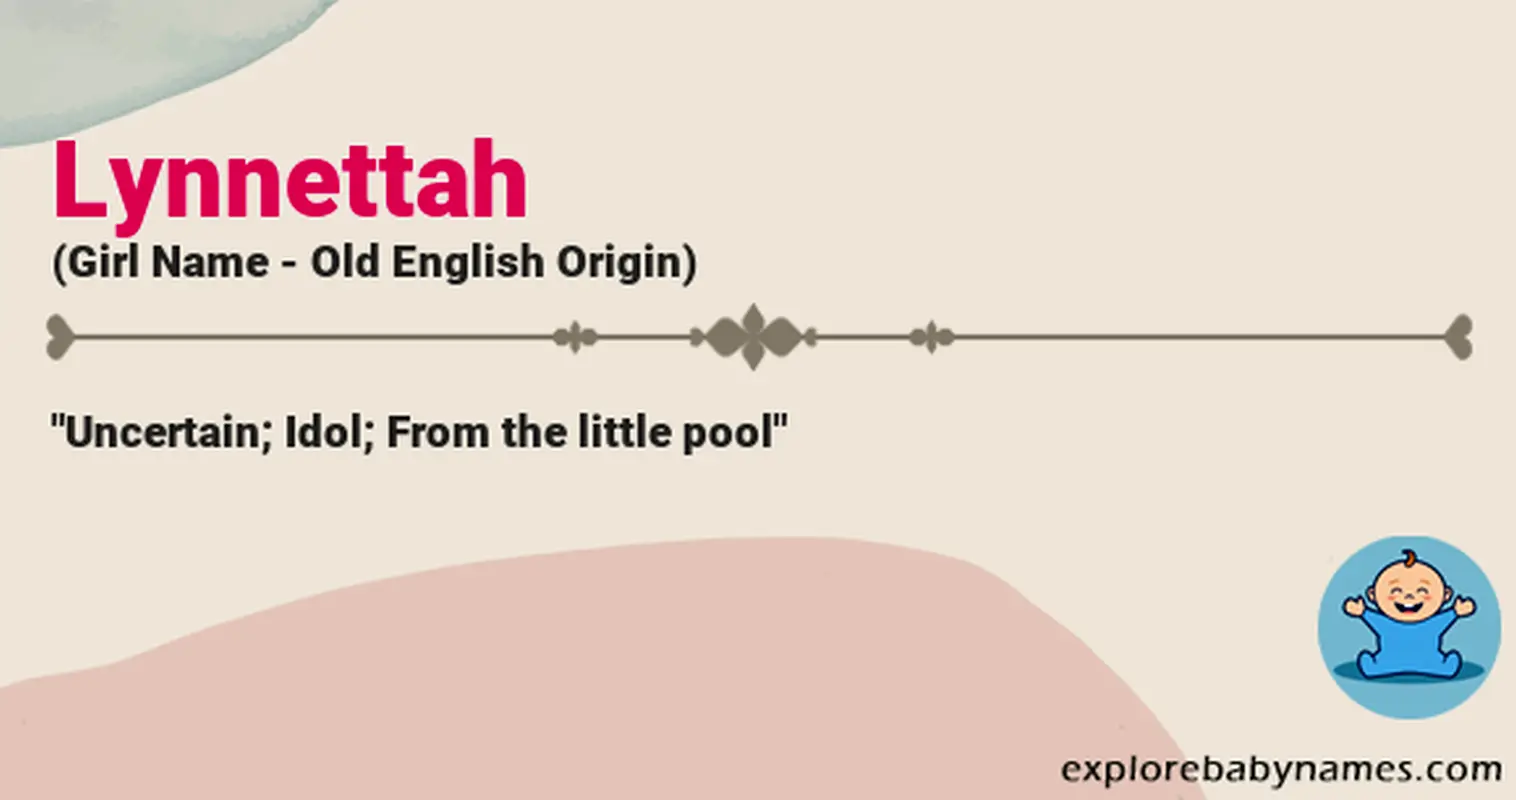 Meaning of Lynnettah